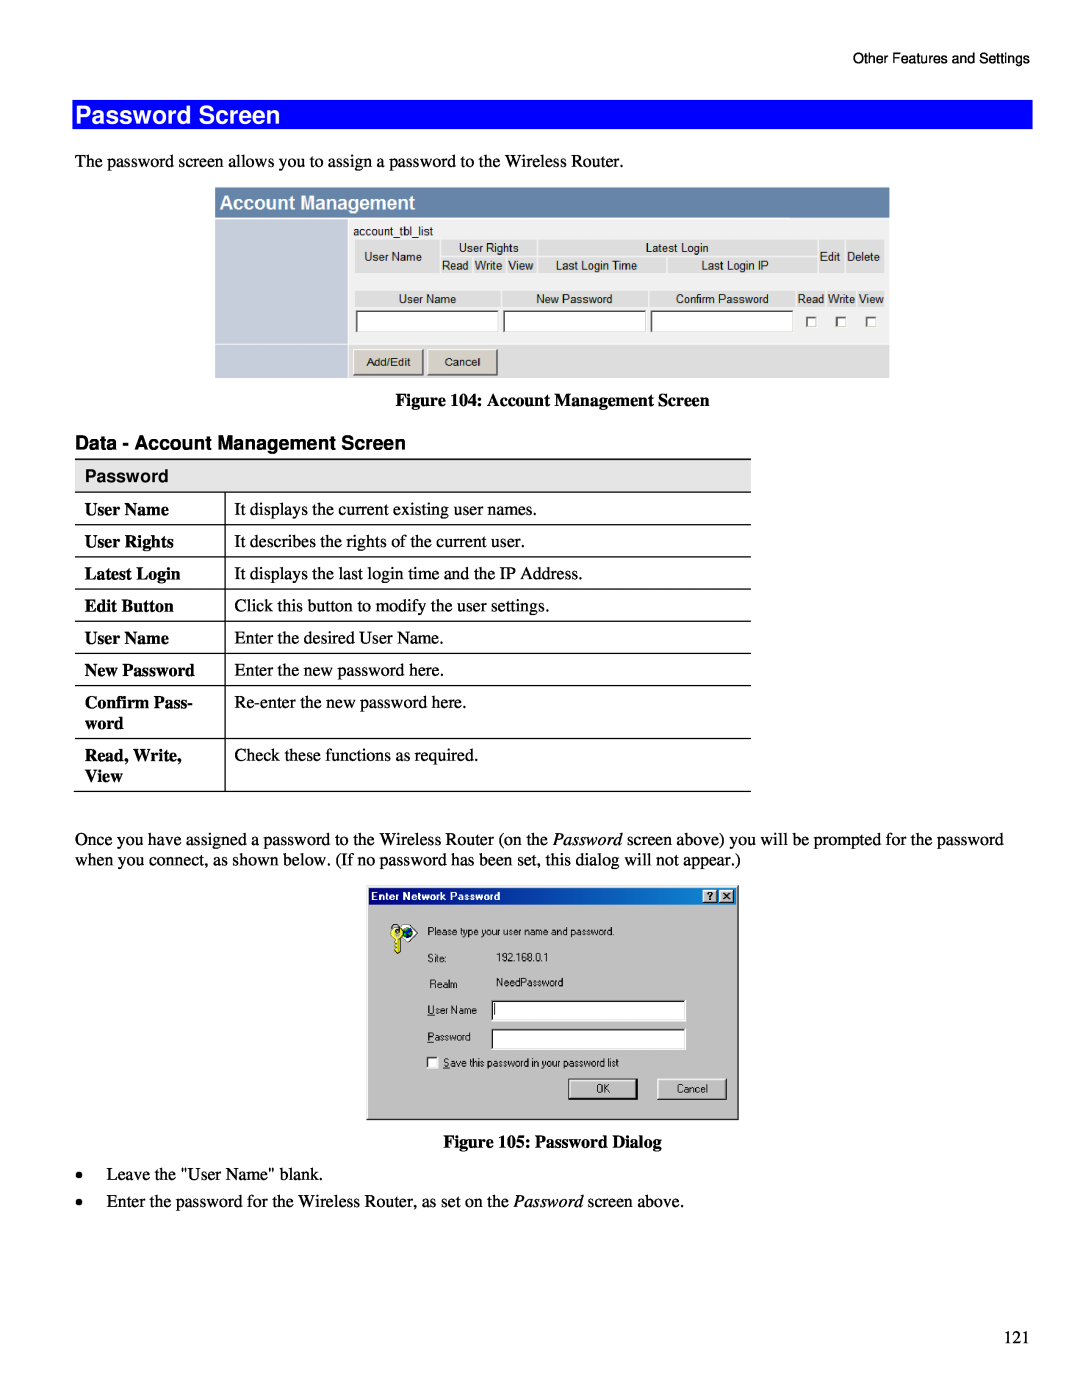 TRENDnet TW100-BRV324 manual Password Screen, Data - Account Management Screen 